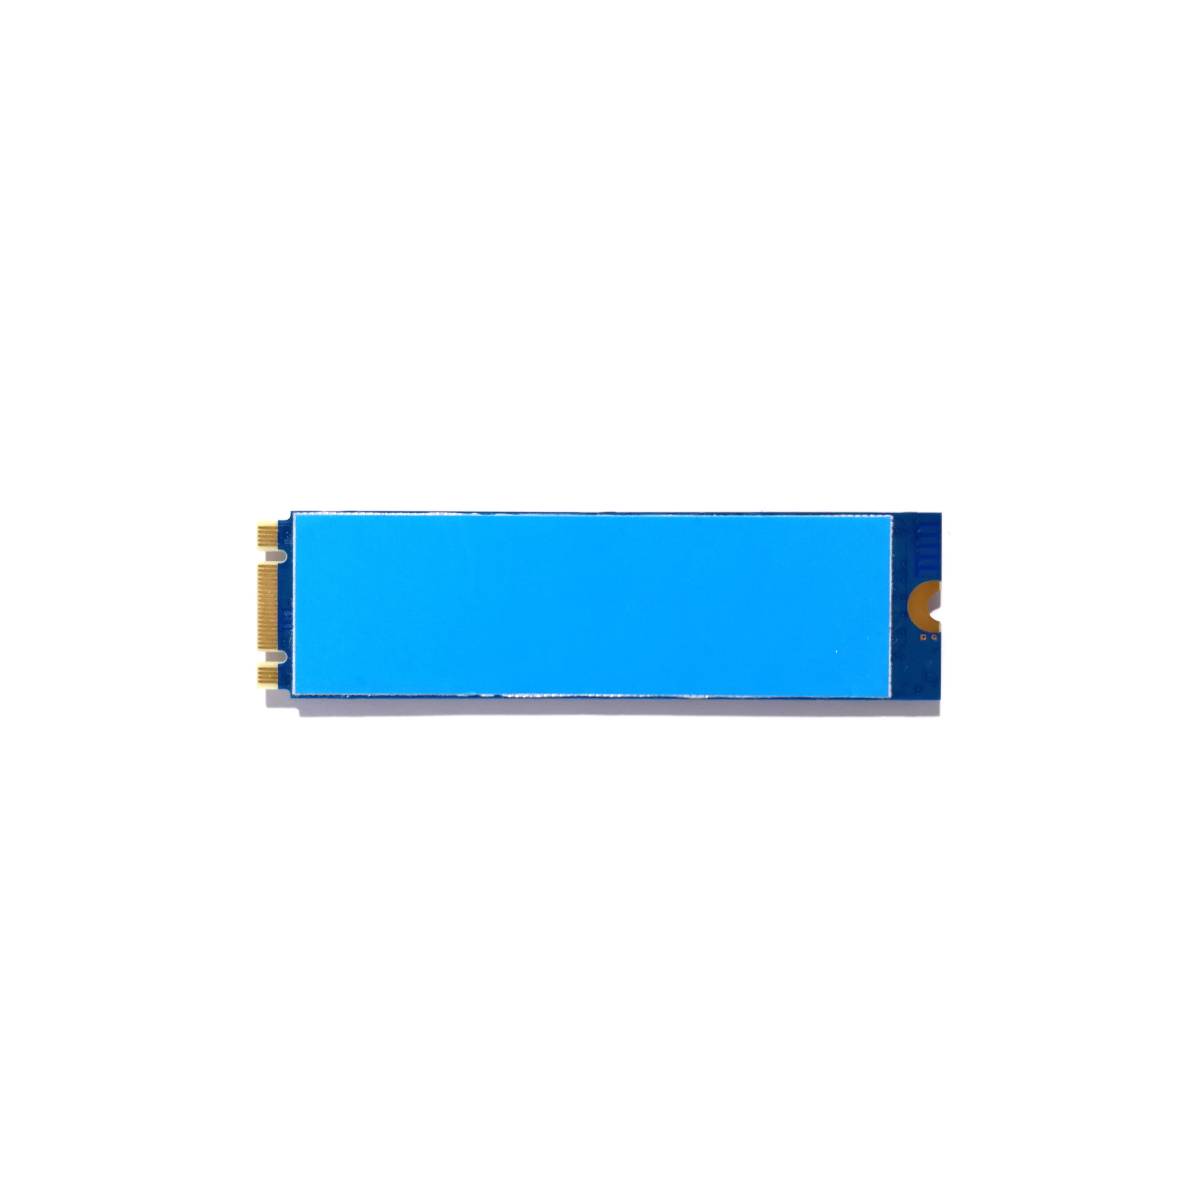 SSD 1TB M.2 2280 SATA 6Gbps 正常 WDC WD BLUE 3D WDS100T2B0B-00YS70 ソリッドステートドライブ [SSDMS#9]